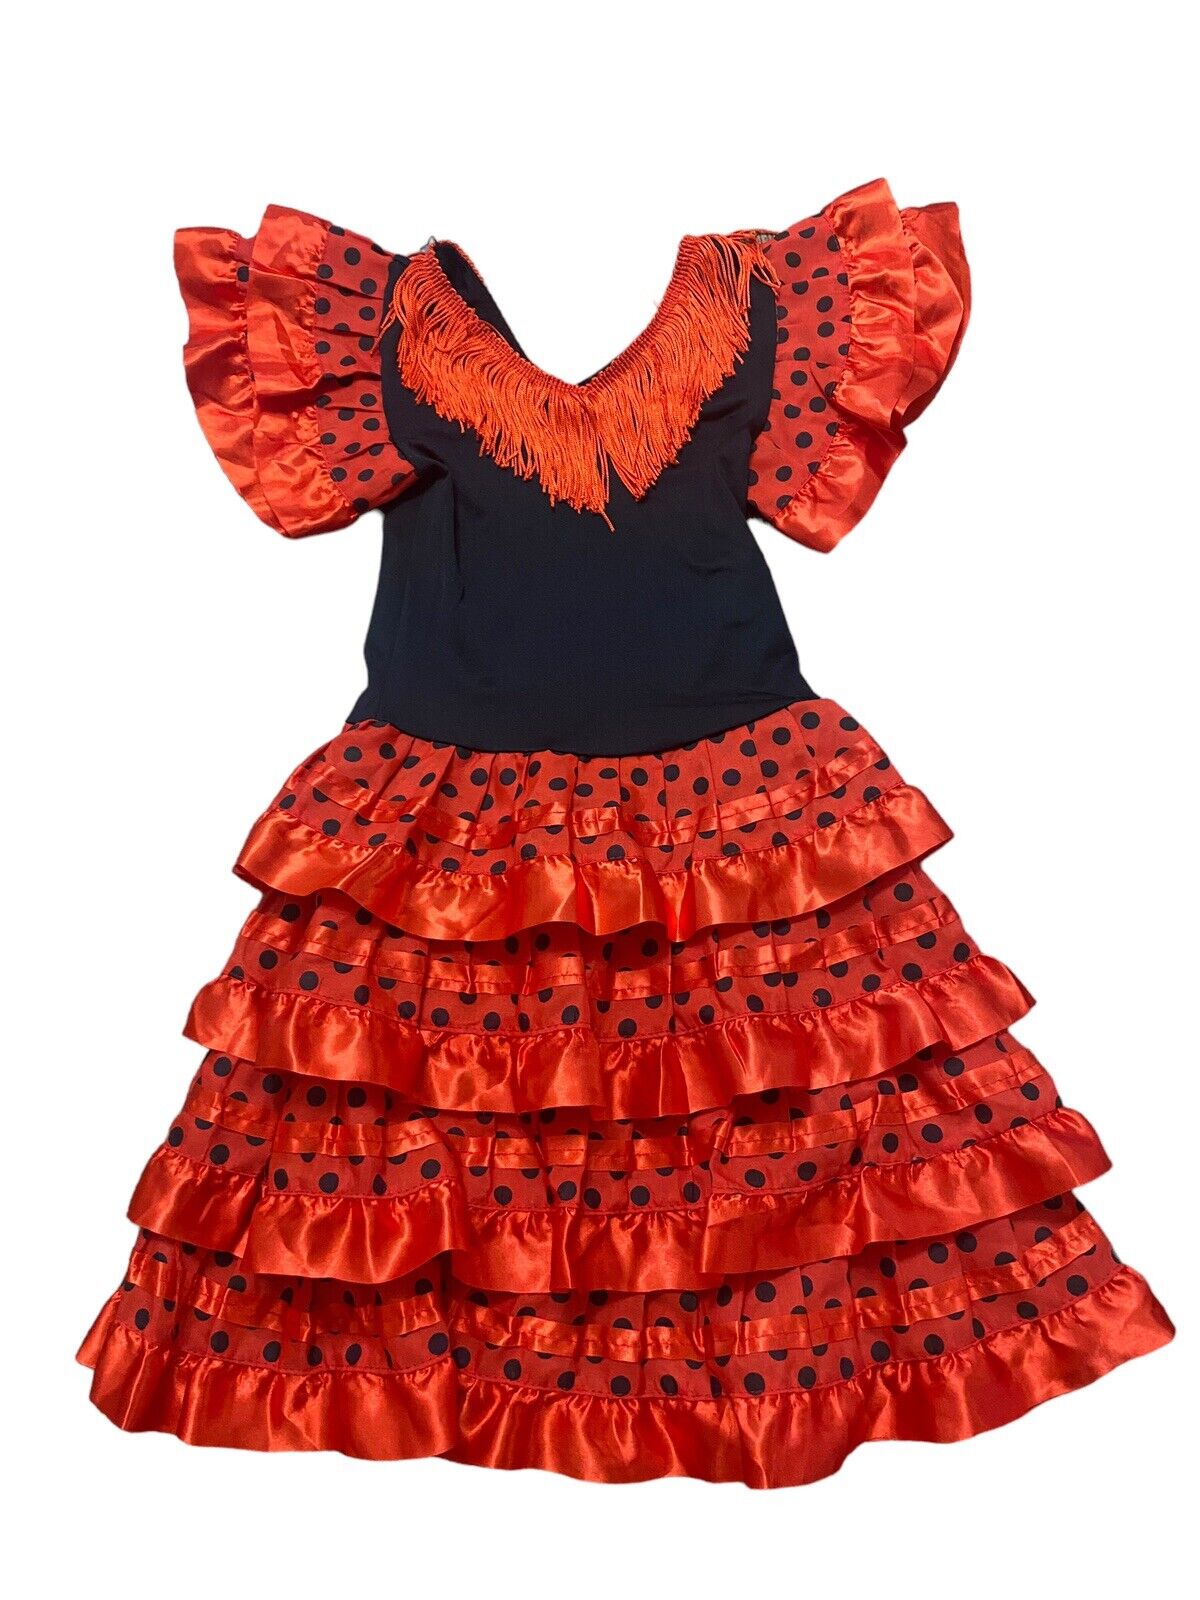 SPANISH FLAMENCO DRESS DANCE COSTUME RED POLKA DOT GIRLS 10